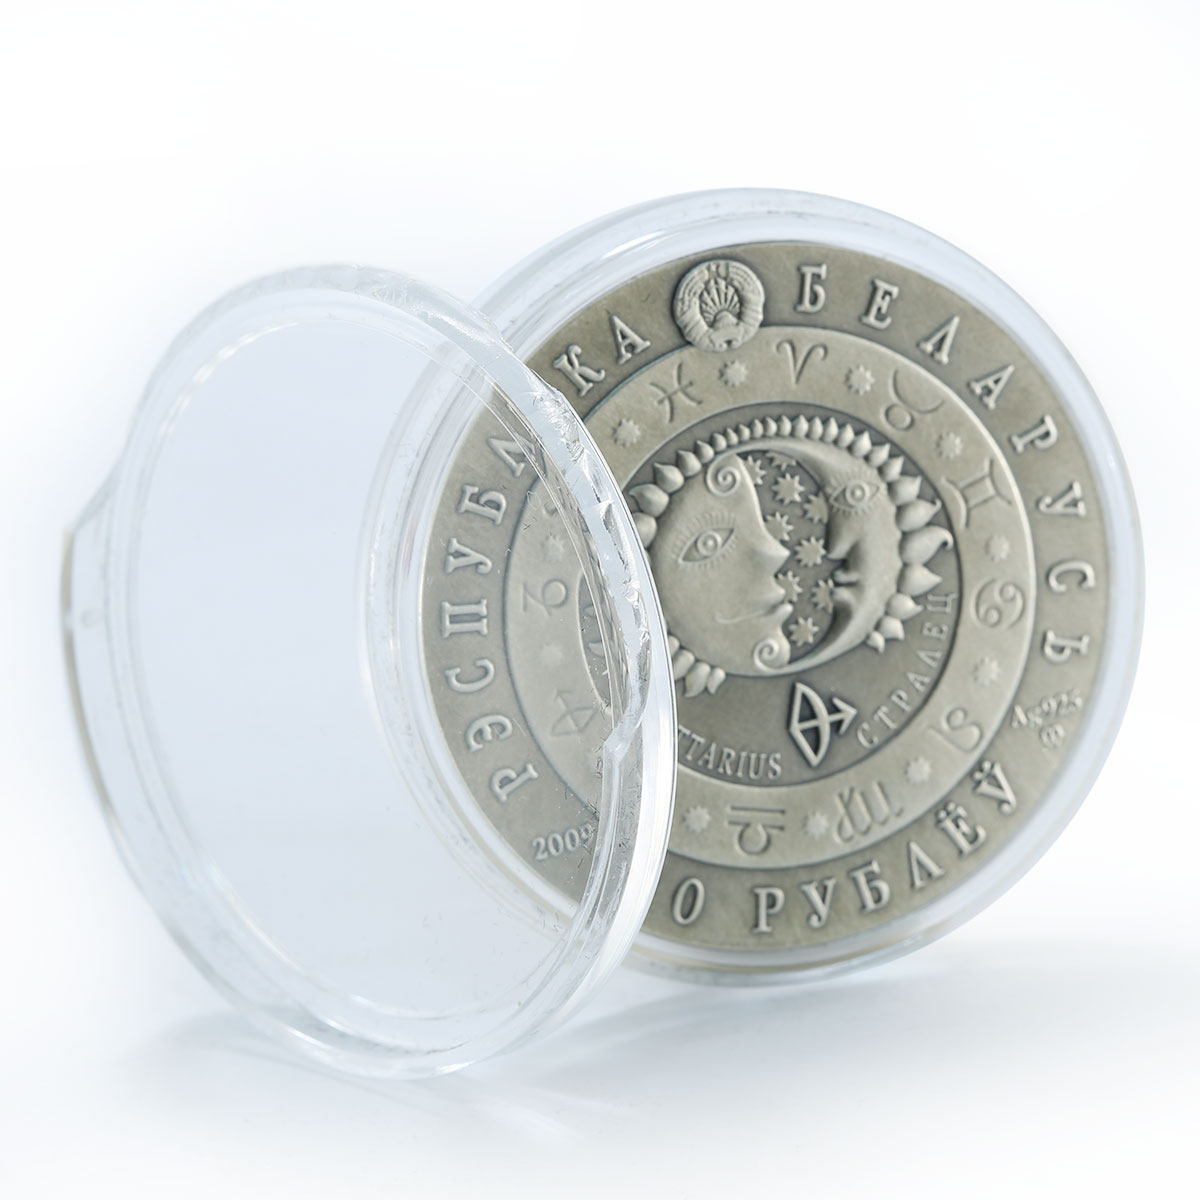 Belarus 20 rubles, Zodiac Signs, Sagittarius, silver, zircons, coin, 2009